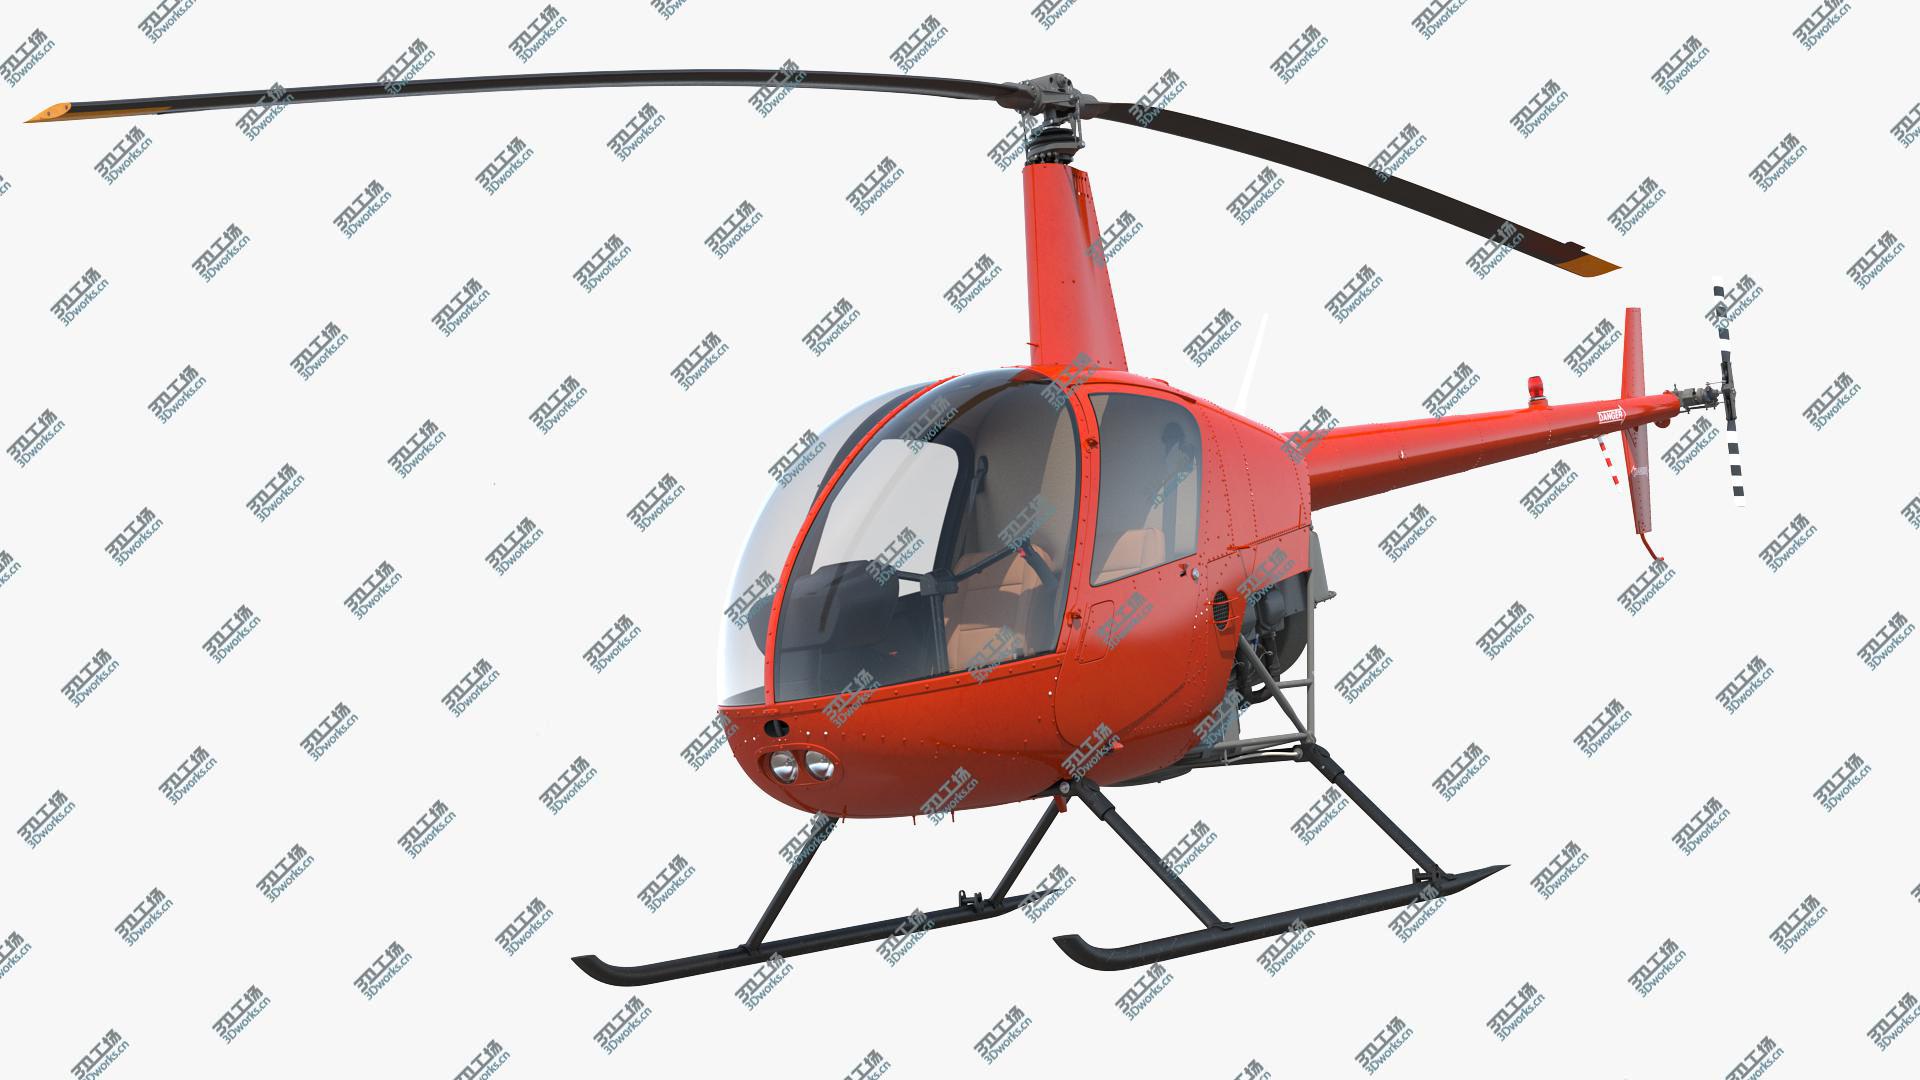 images/goods_img/20210319/3D Lightweight Helicopter model/1.jpg